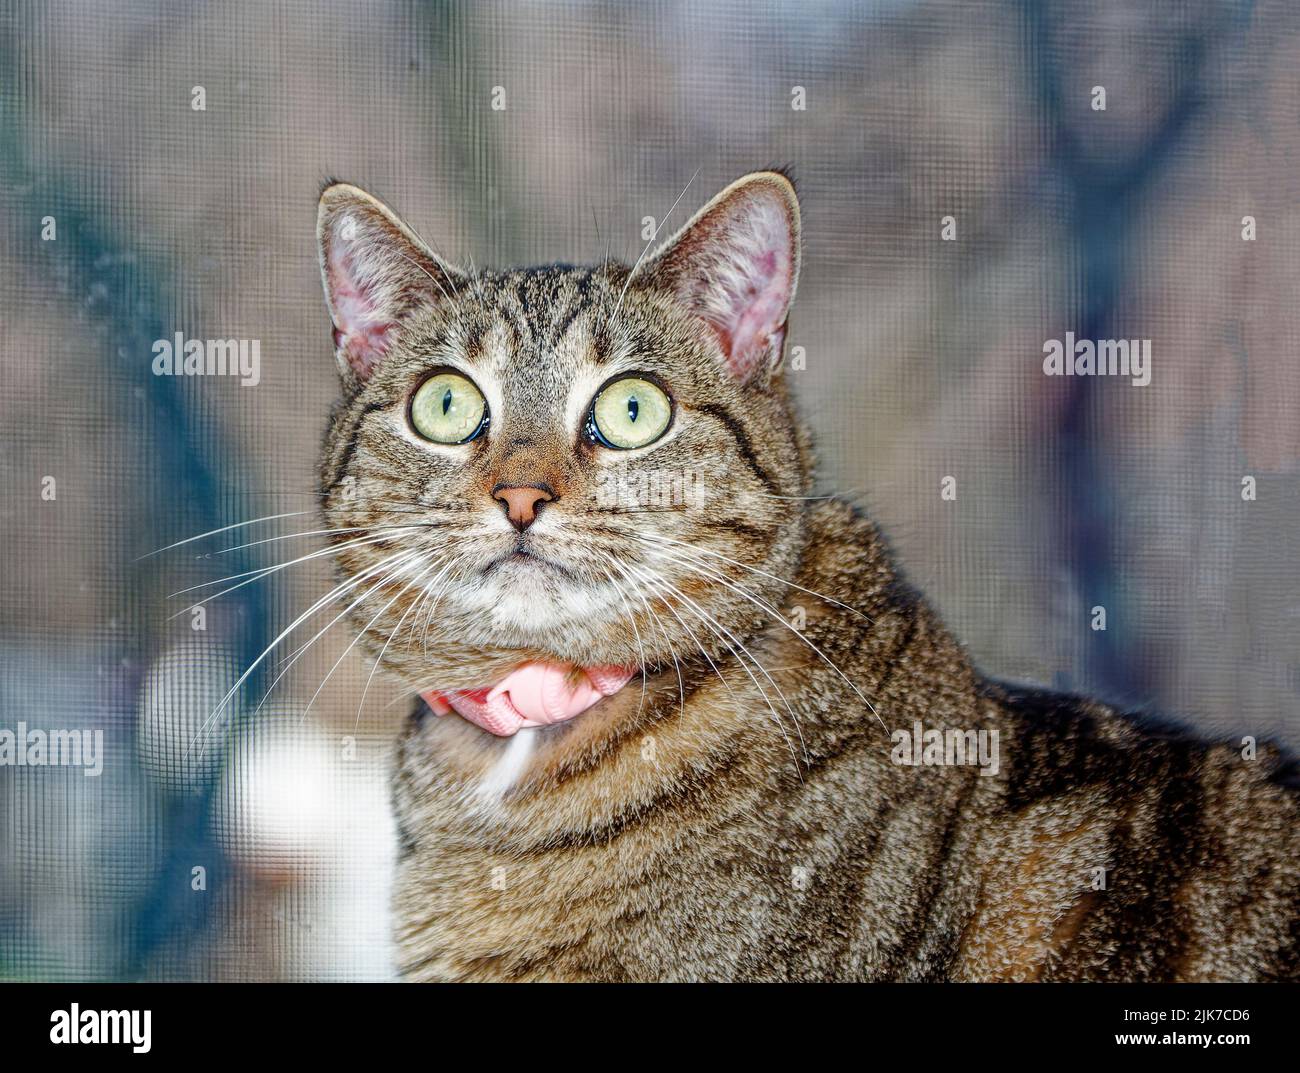 retrato de gato, piel a rayas, ojos verdes claros, alerta, mascota, Felino, animal, cuello rosa, PR Foto de stock